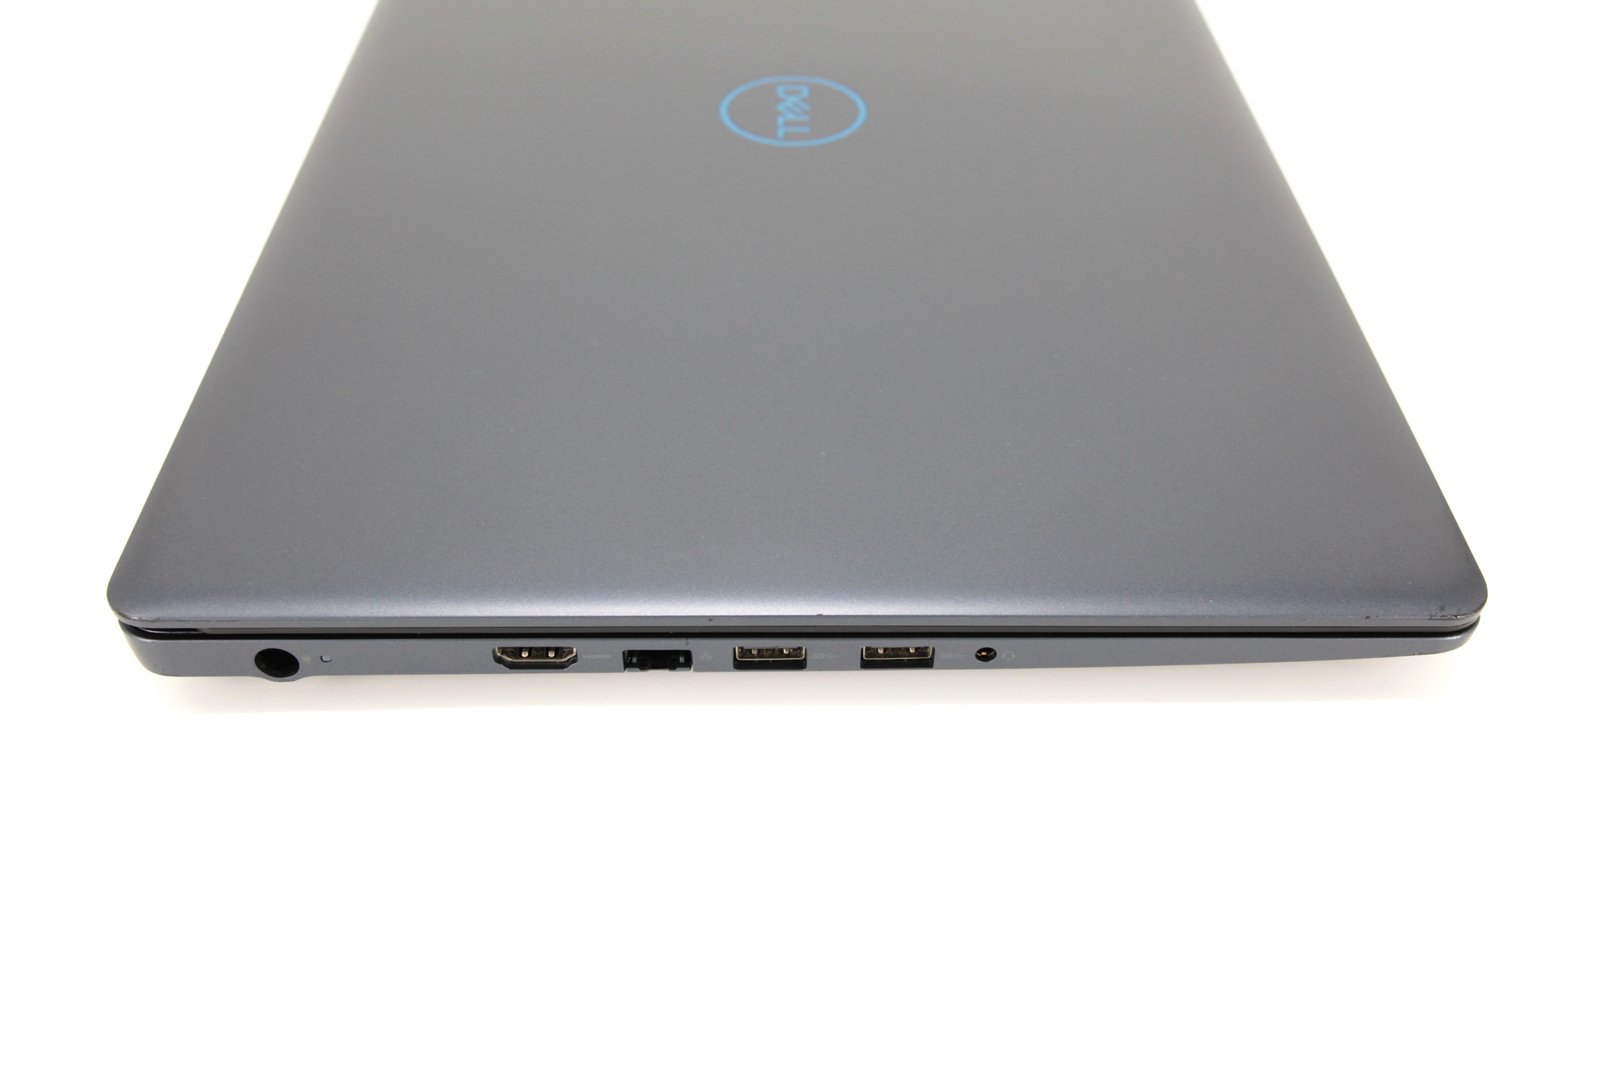 Dell G3 15 IPS Gaming Laptop: 8th Gen i5, GTX 1050, 256GB SSD, 8GB RAM - CruiseTech